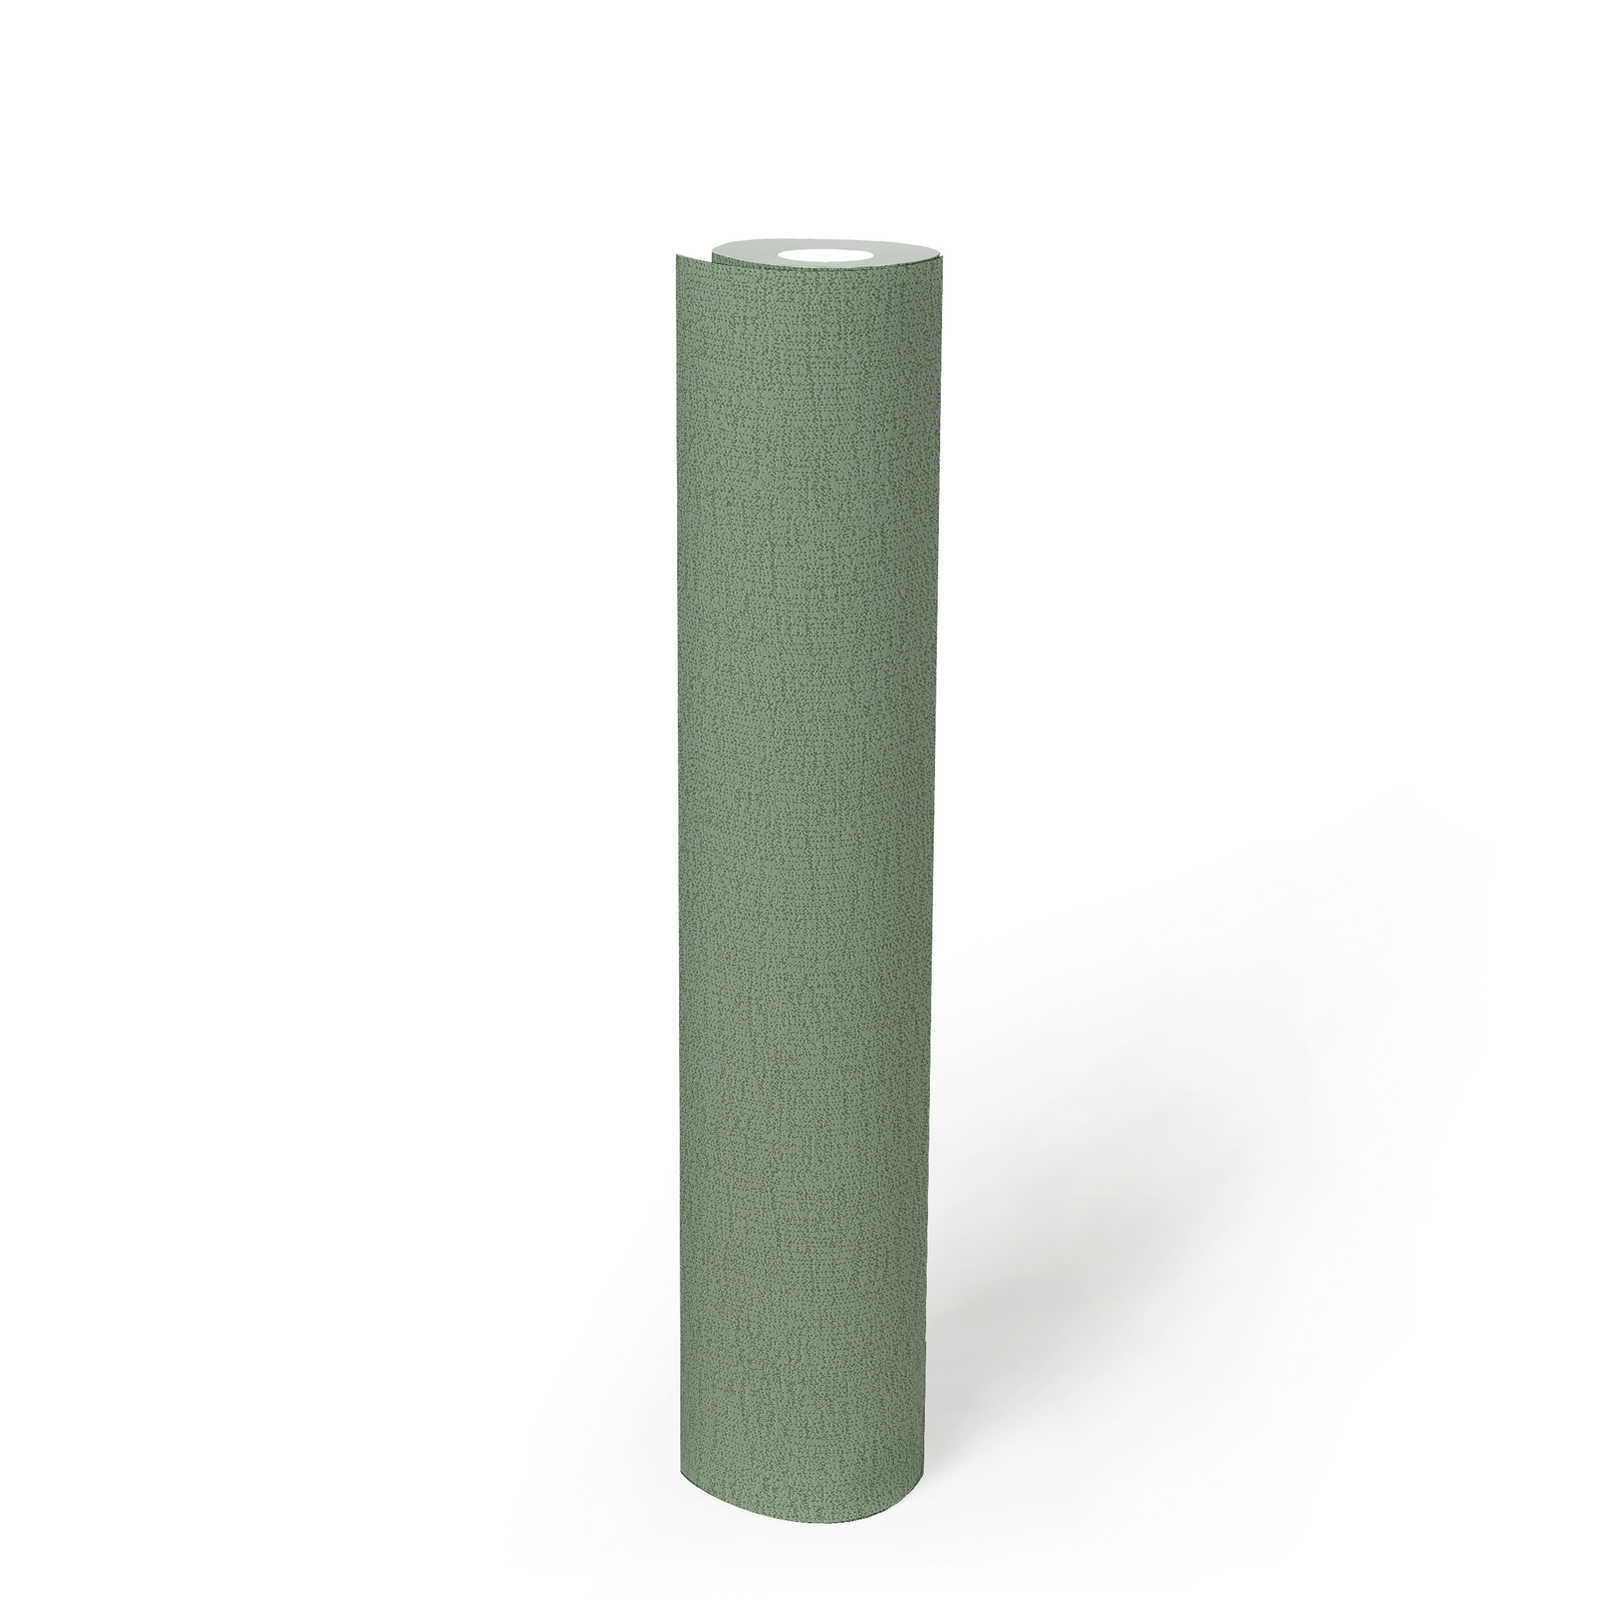             Non-woven wallpaper plain moss green with textured pattern - green
        